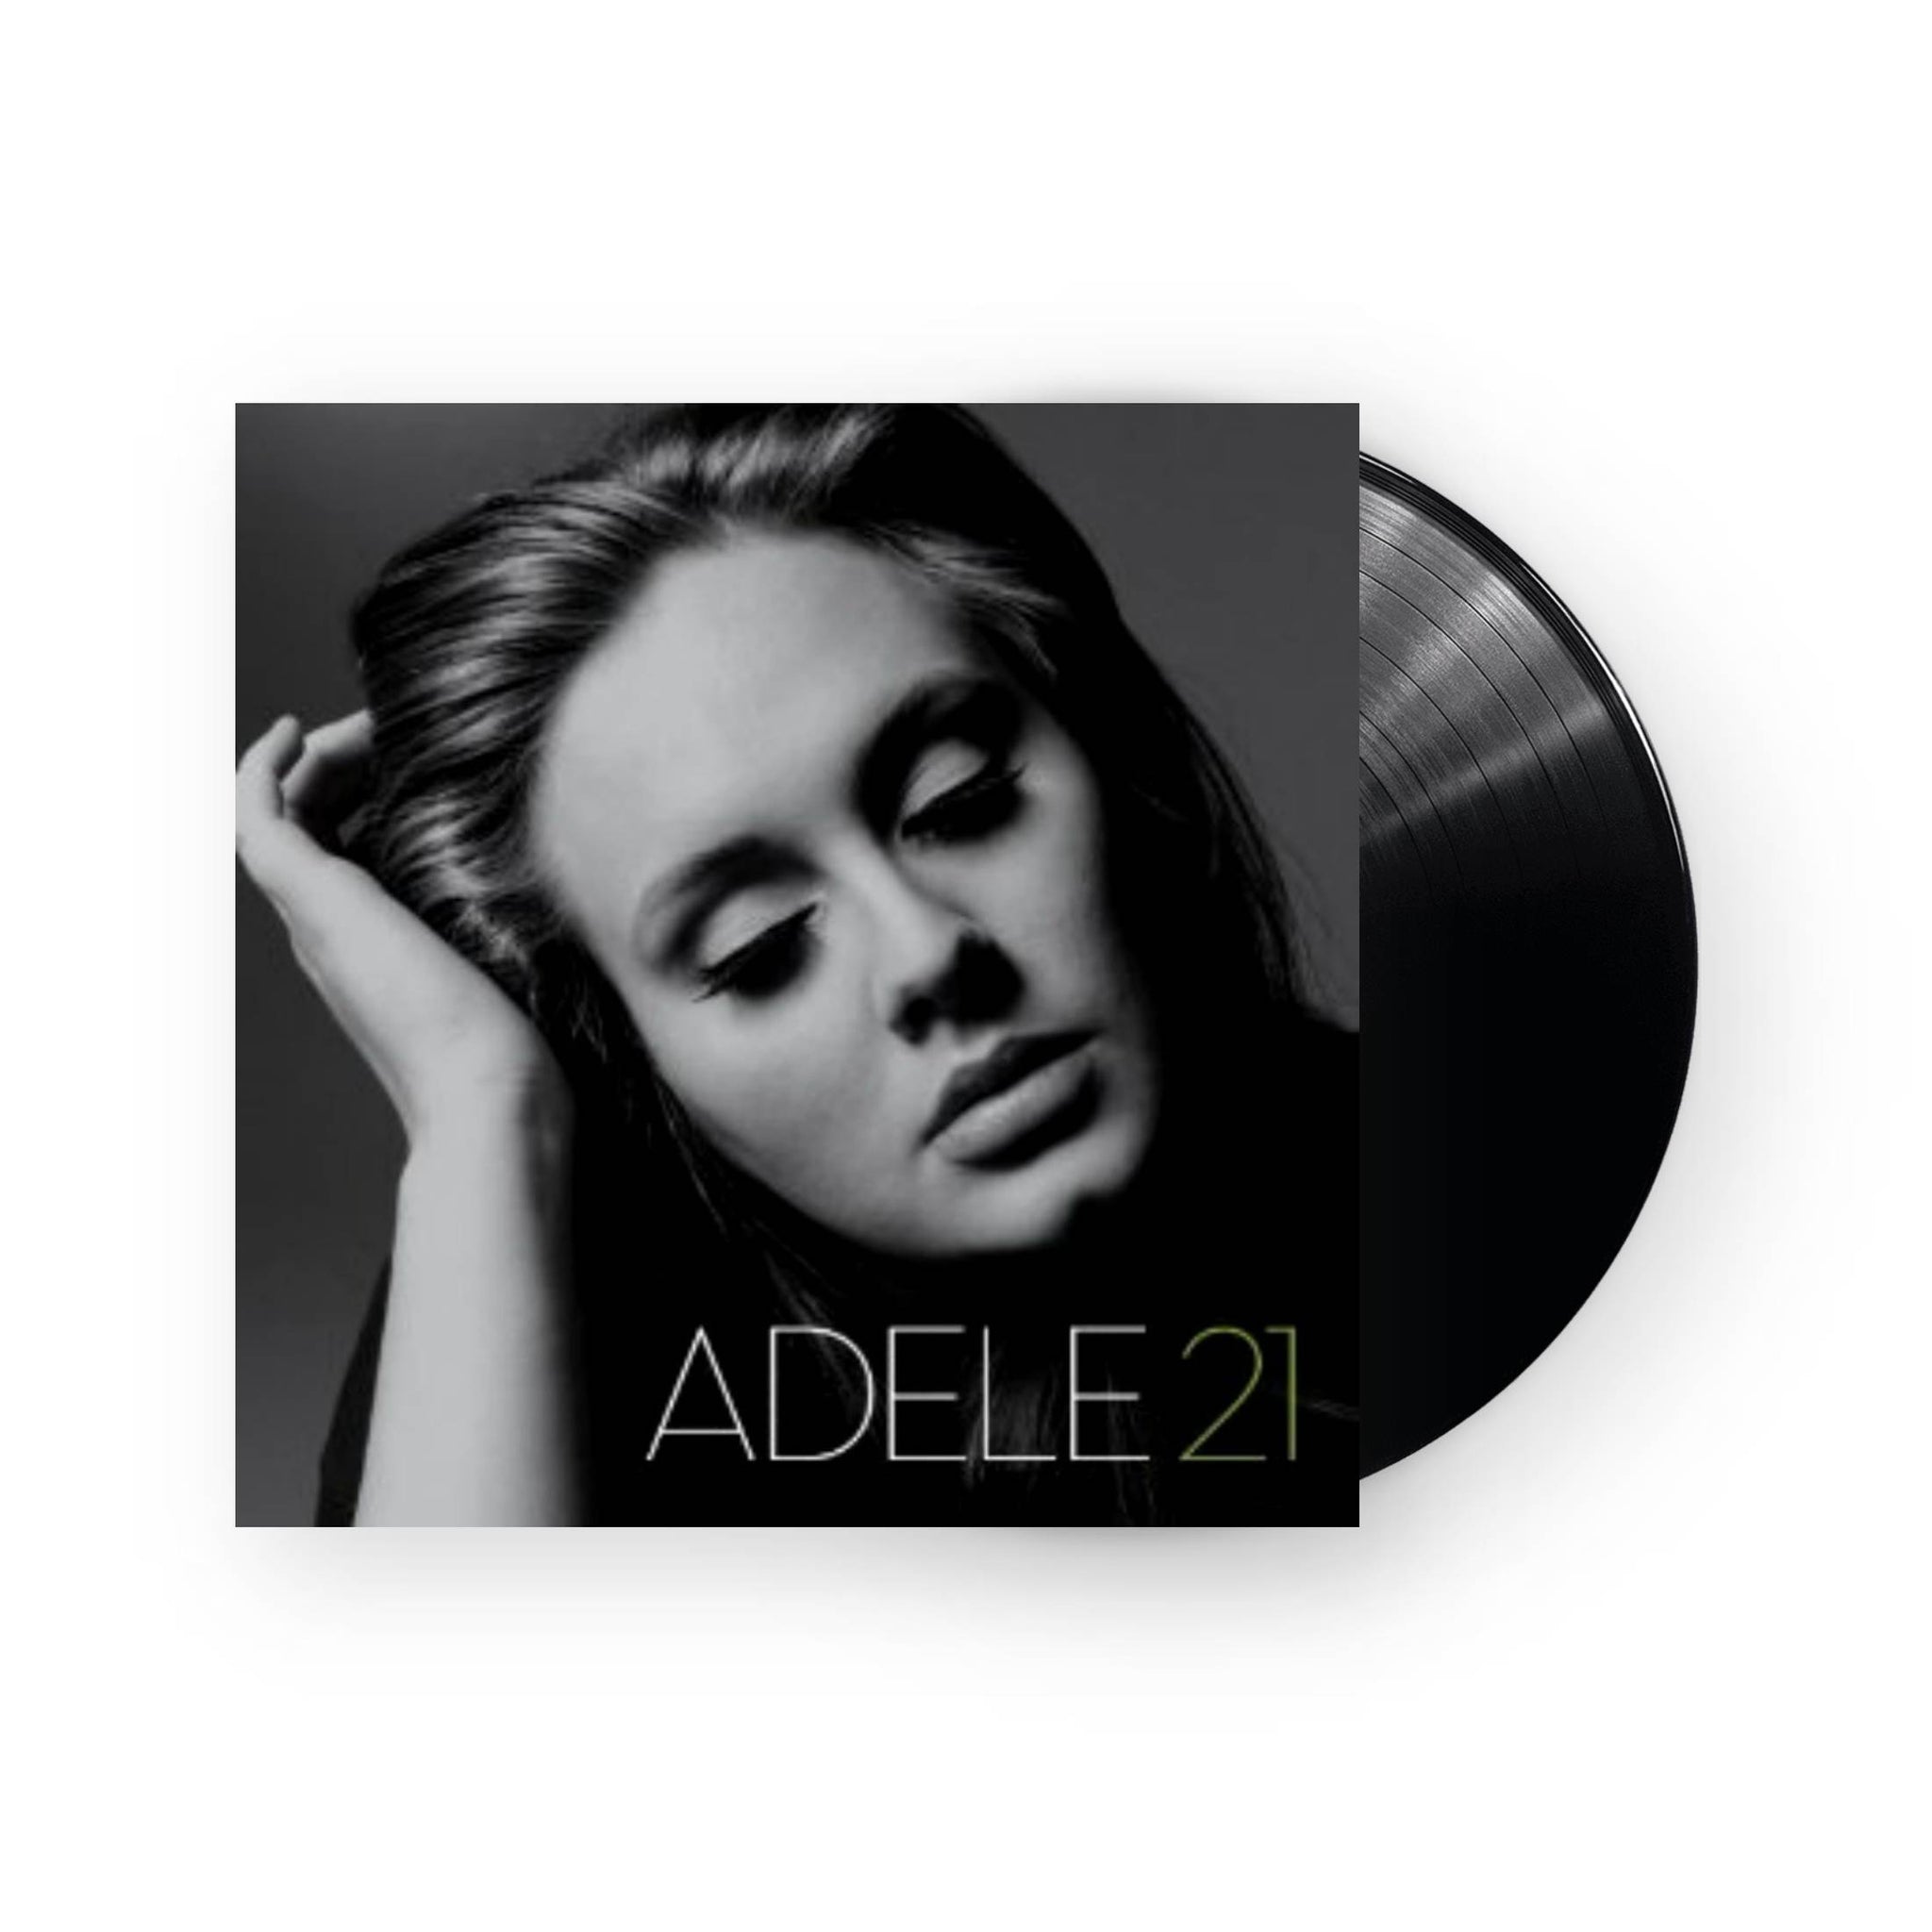 Adele 21 LP (Black Vinyl)